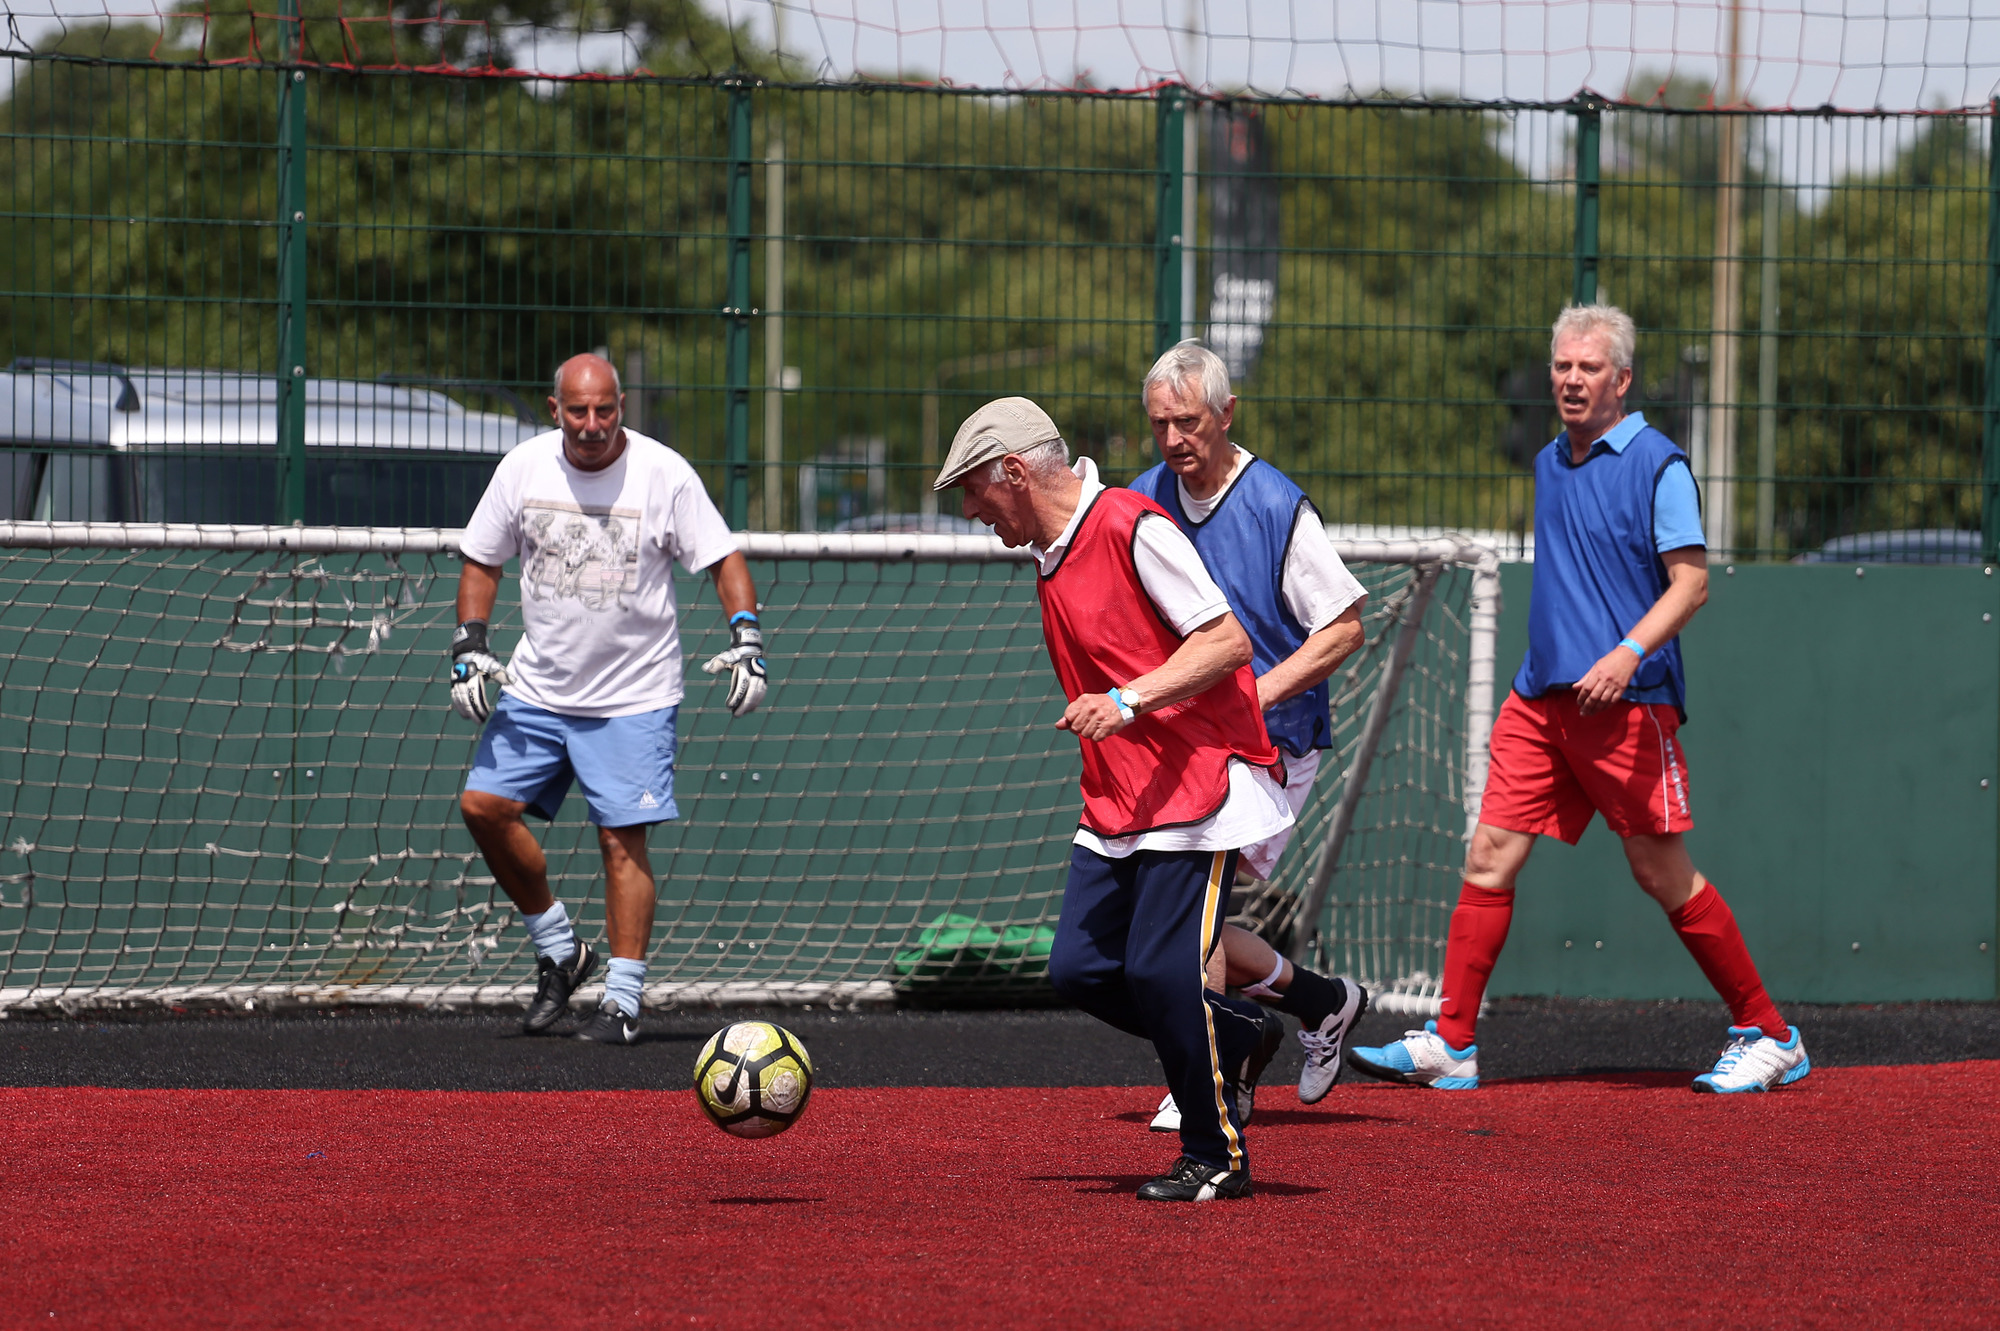 Older gentlemen taking part in walking football